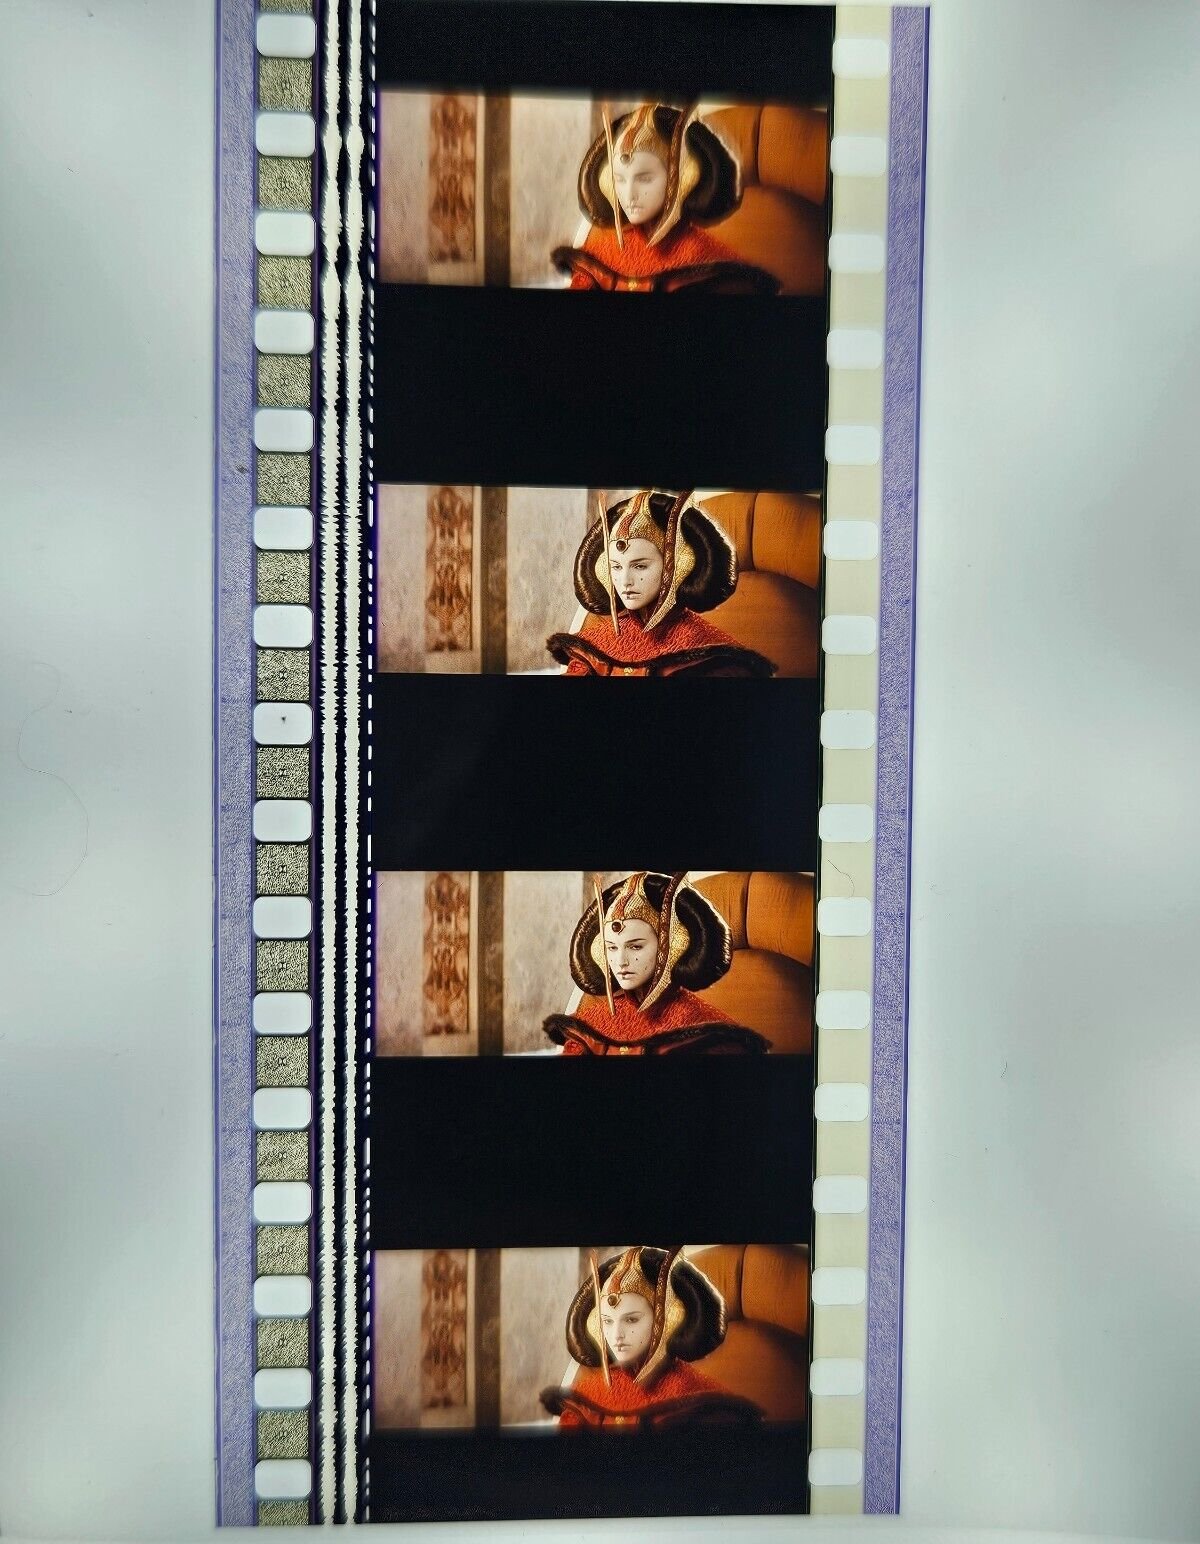 Queen Amidala Star Wars Episode 1 Phantom Menace 35mm Original Film Cells SW2064 Star Wars 35mm Film Cell - Hobby Gems